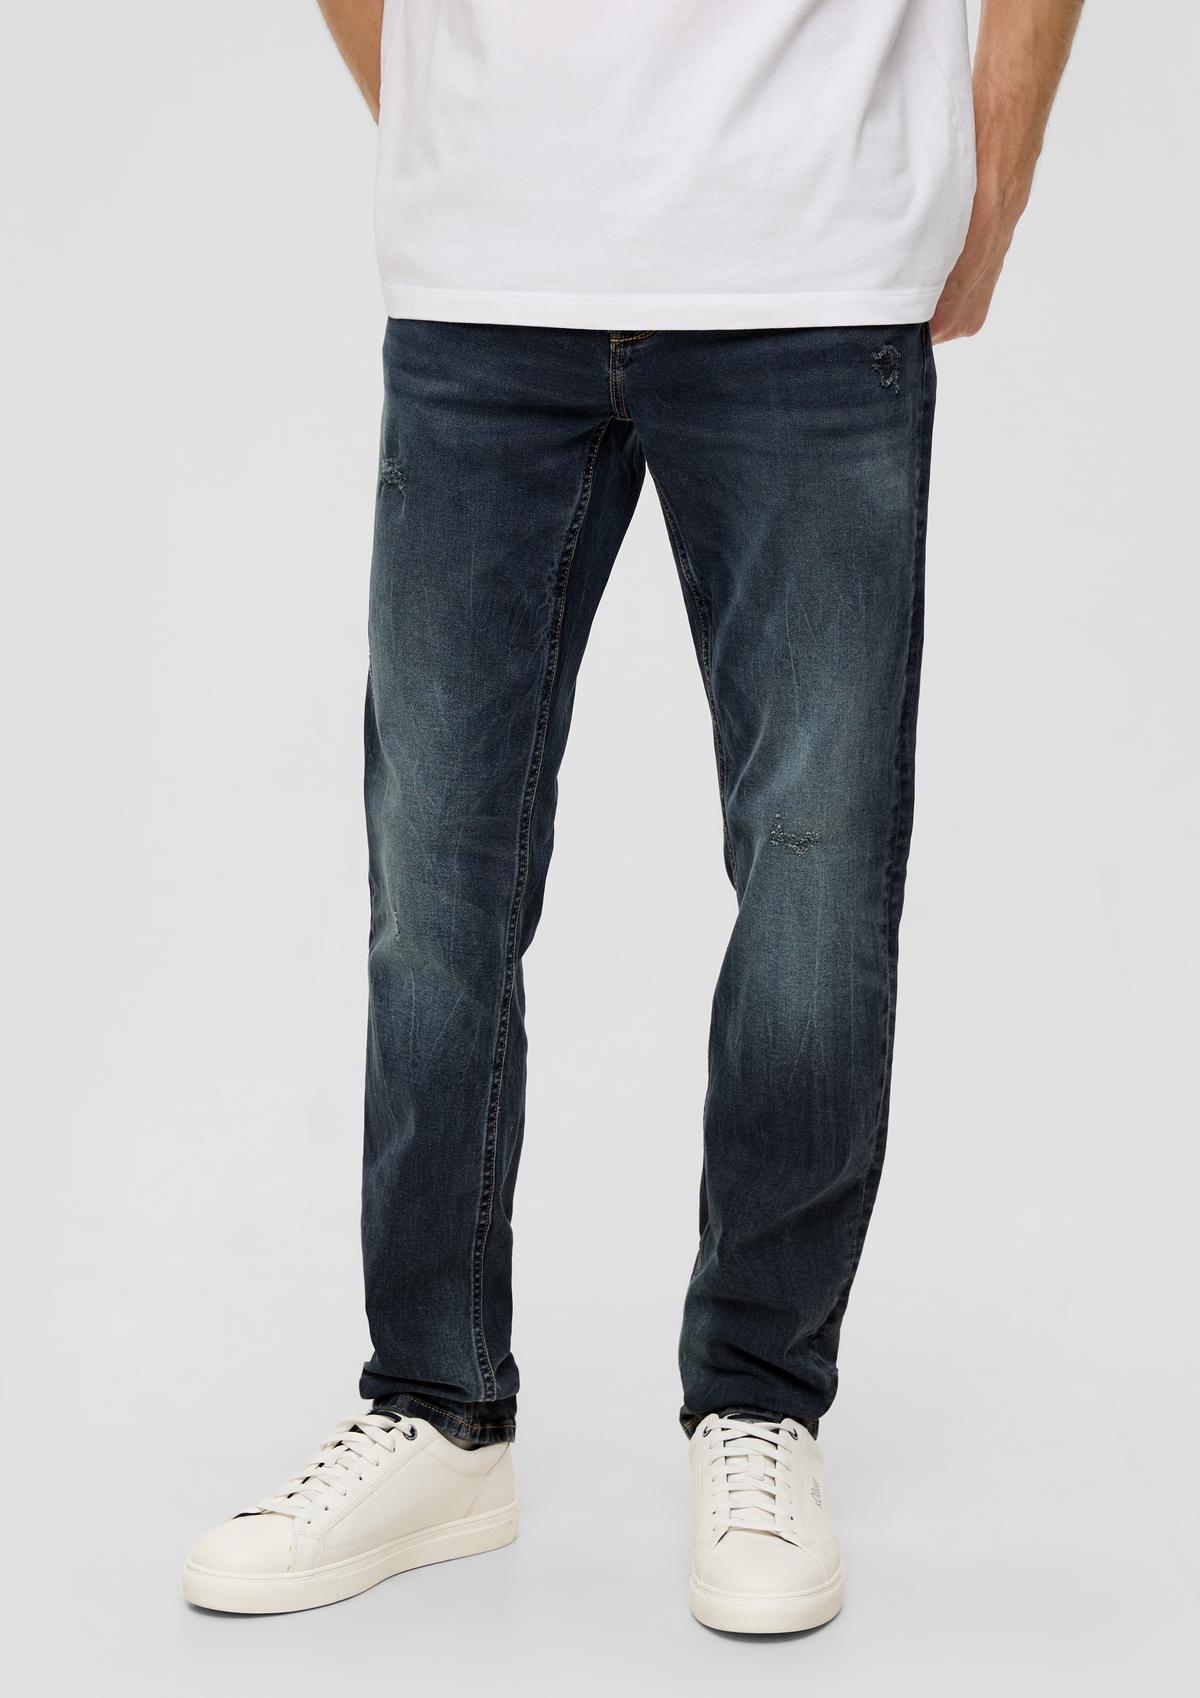 Nelio Jeans / Slim Fit / Mid Rise / Slim Leg / Garment Wash - dark blue